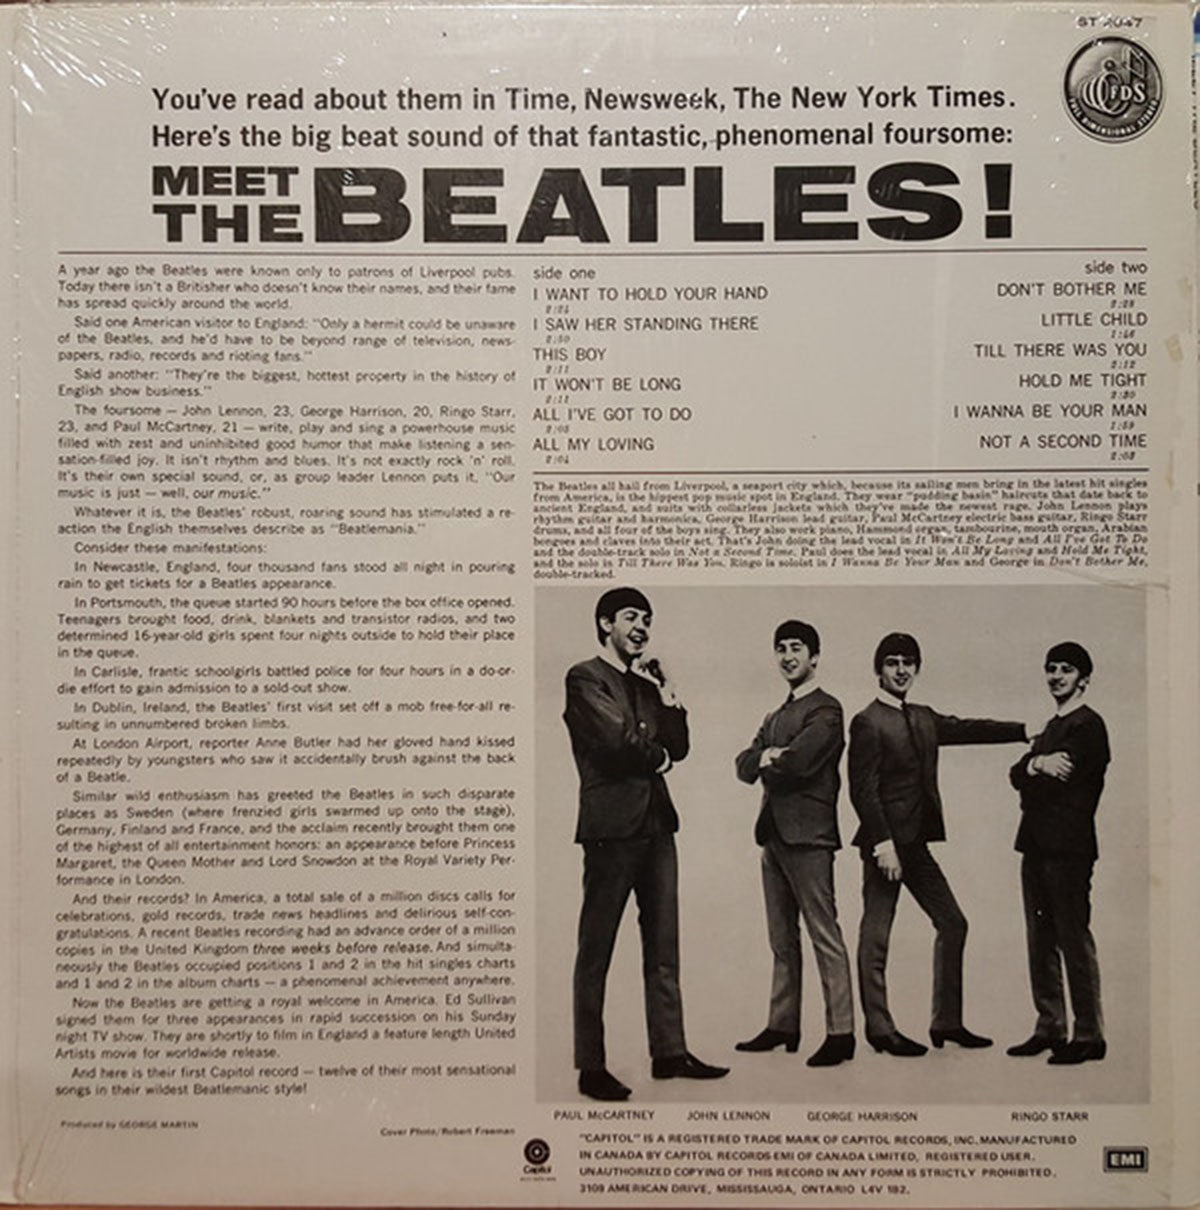 The Beatles – Meet The Beatles!